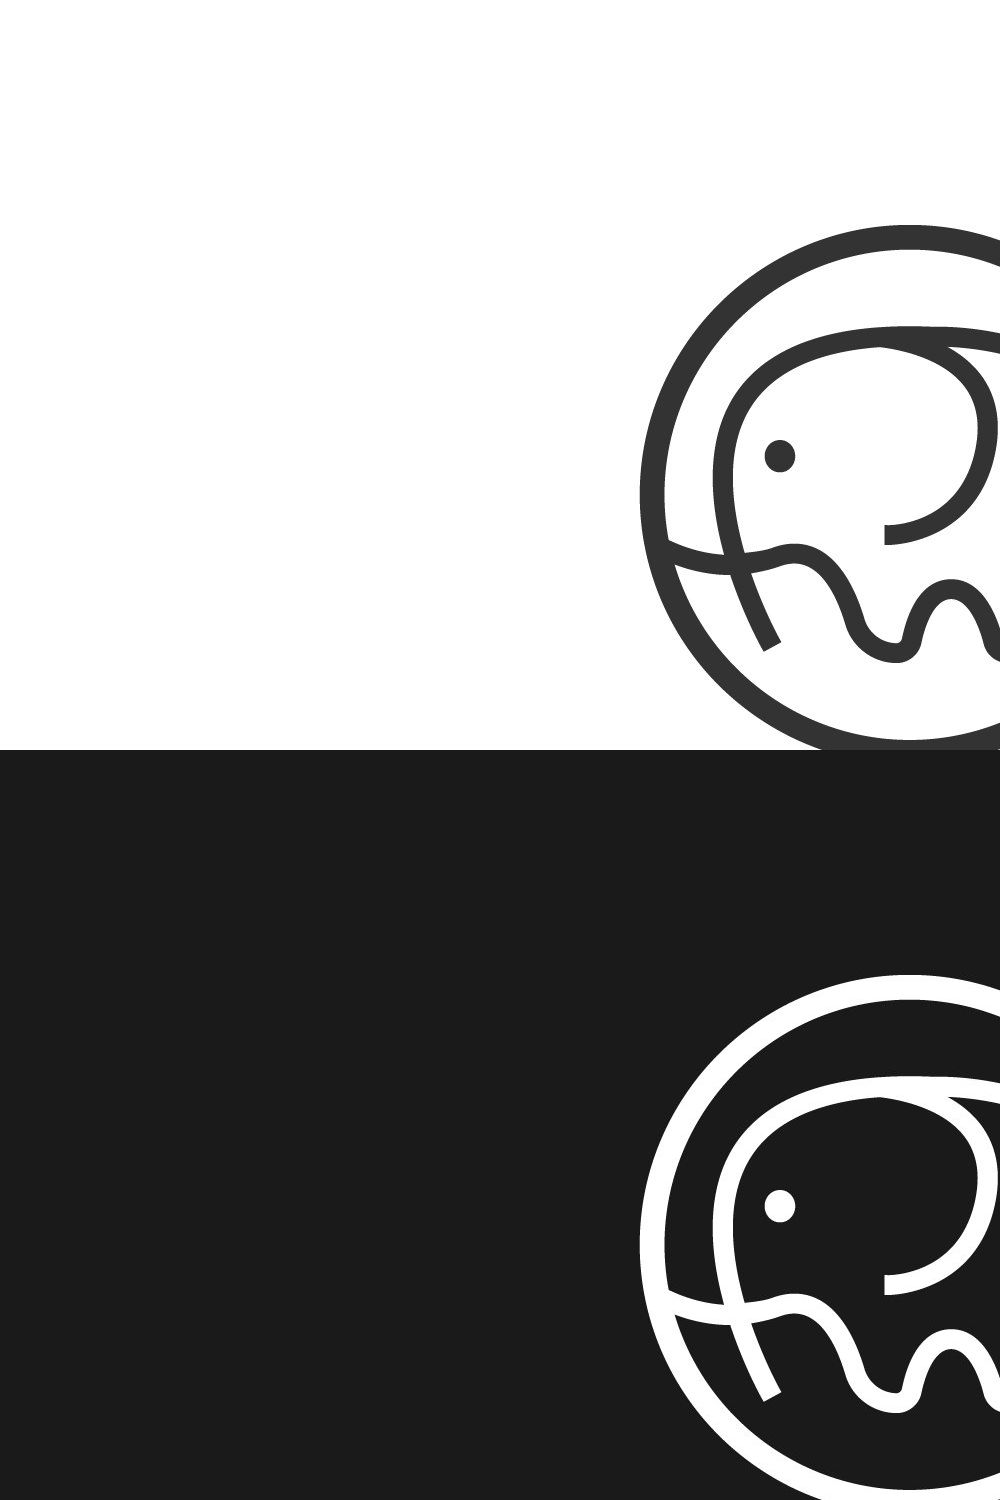 Elephant logo design. pinterest preview image.